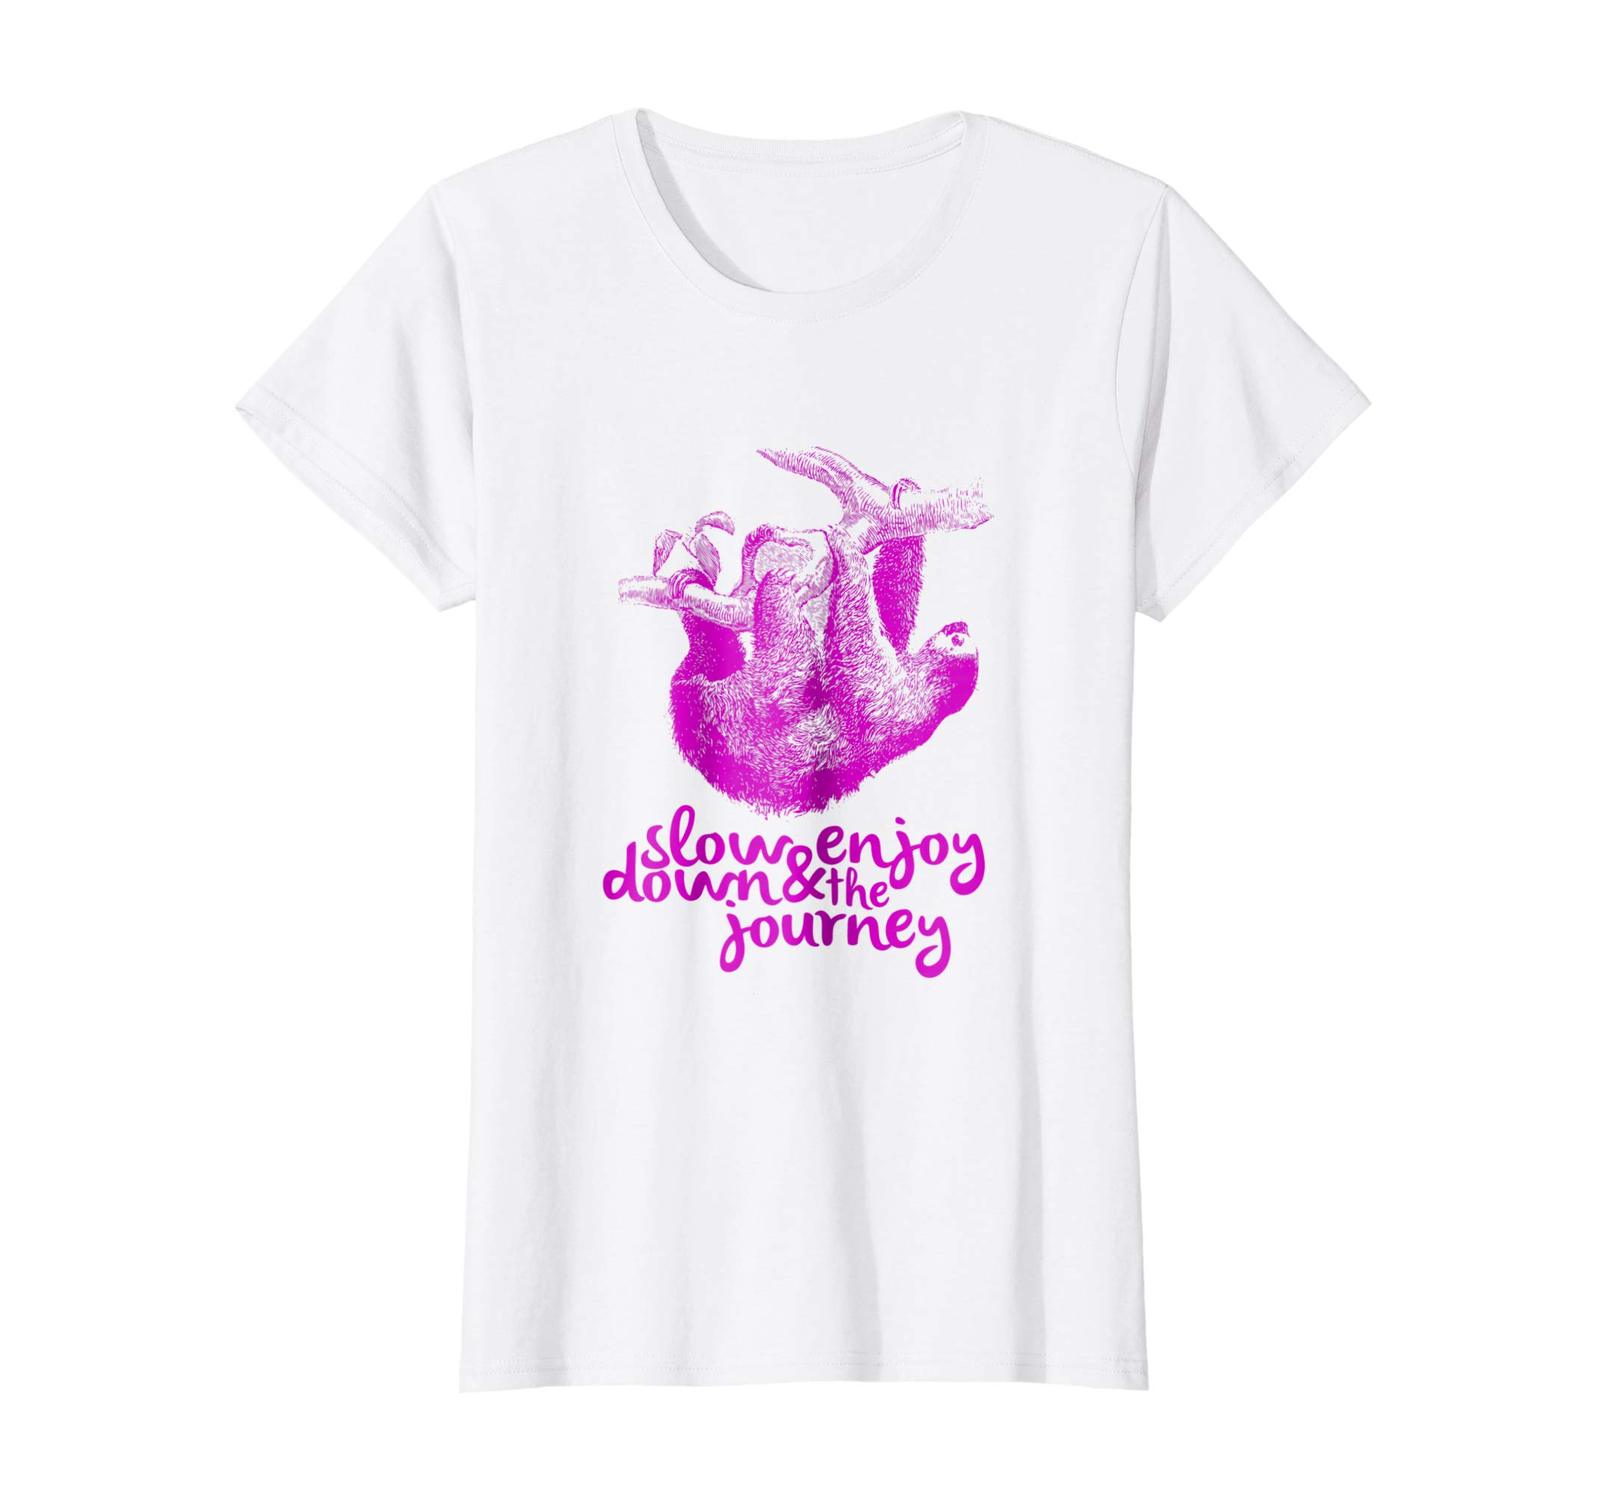 Dog Fashion - Slow Down & Enjoy the Journey Sloth T-Shirt Wowen